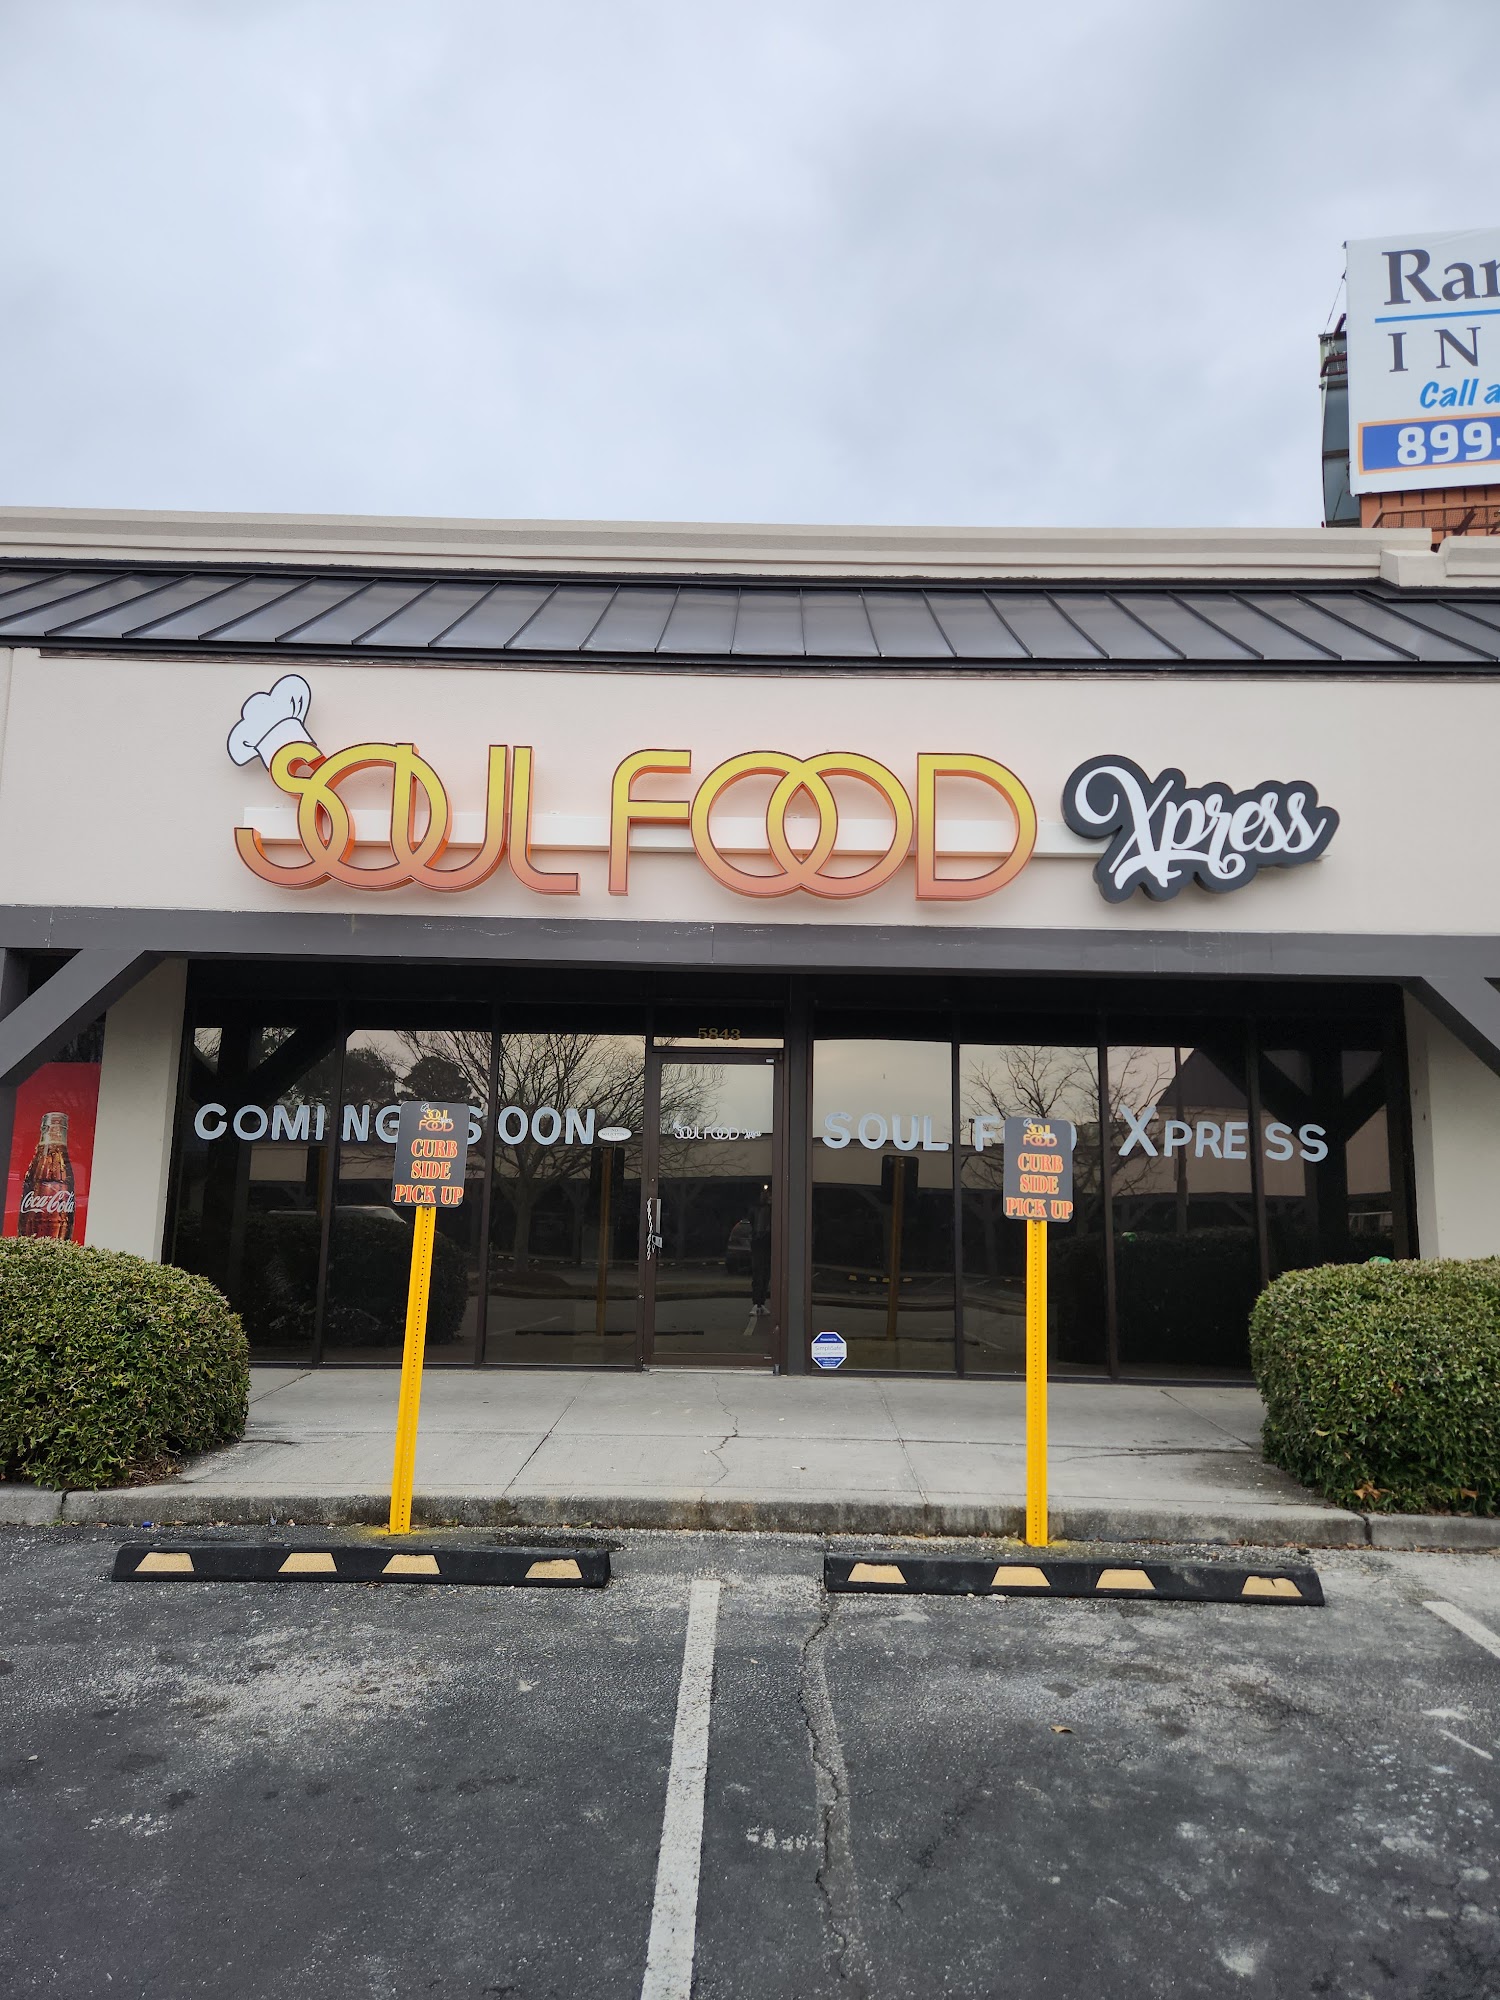 Soul food express